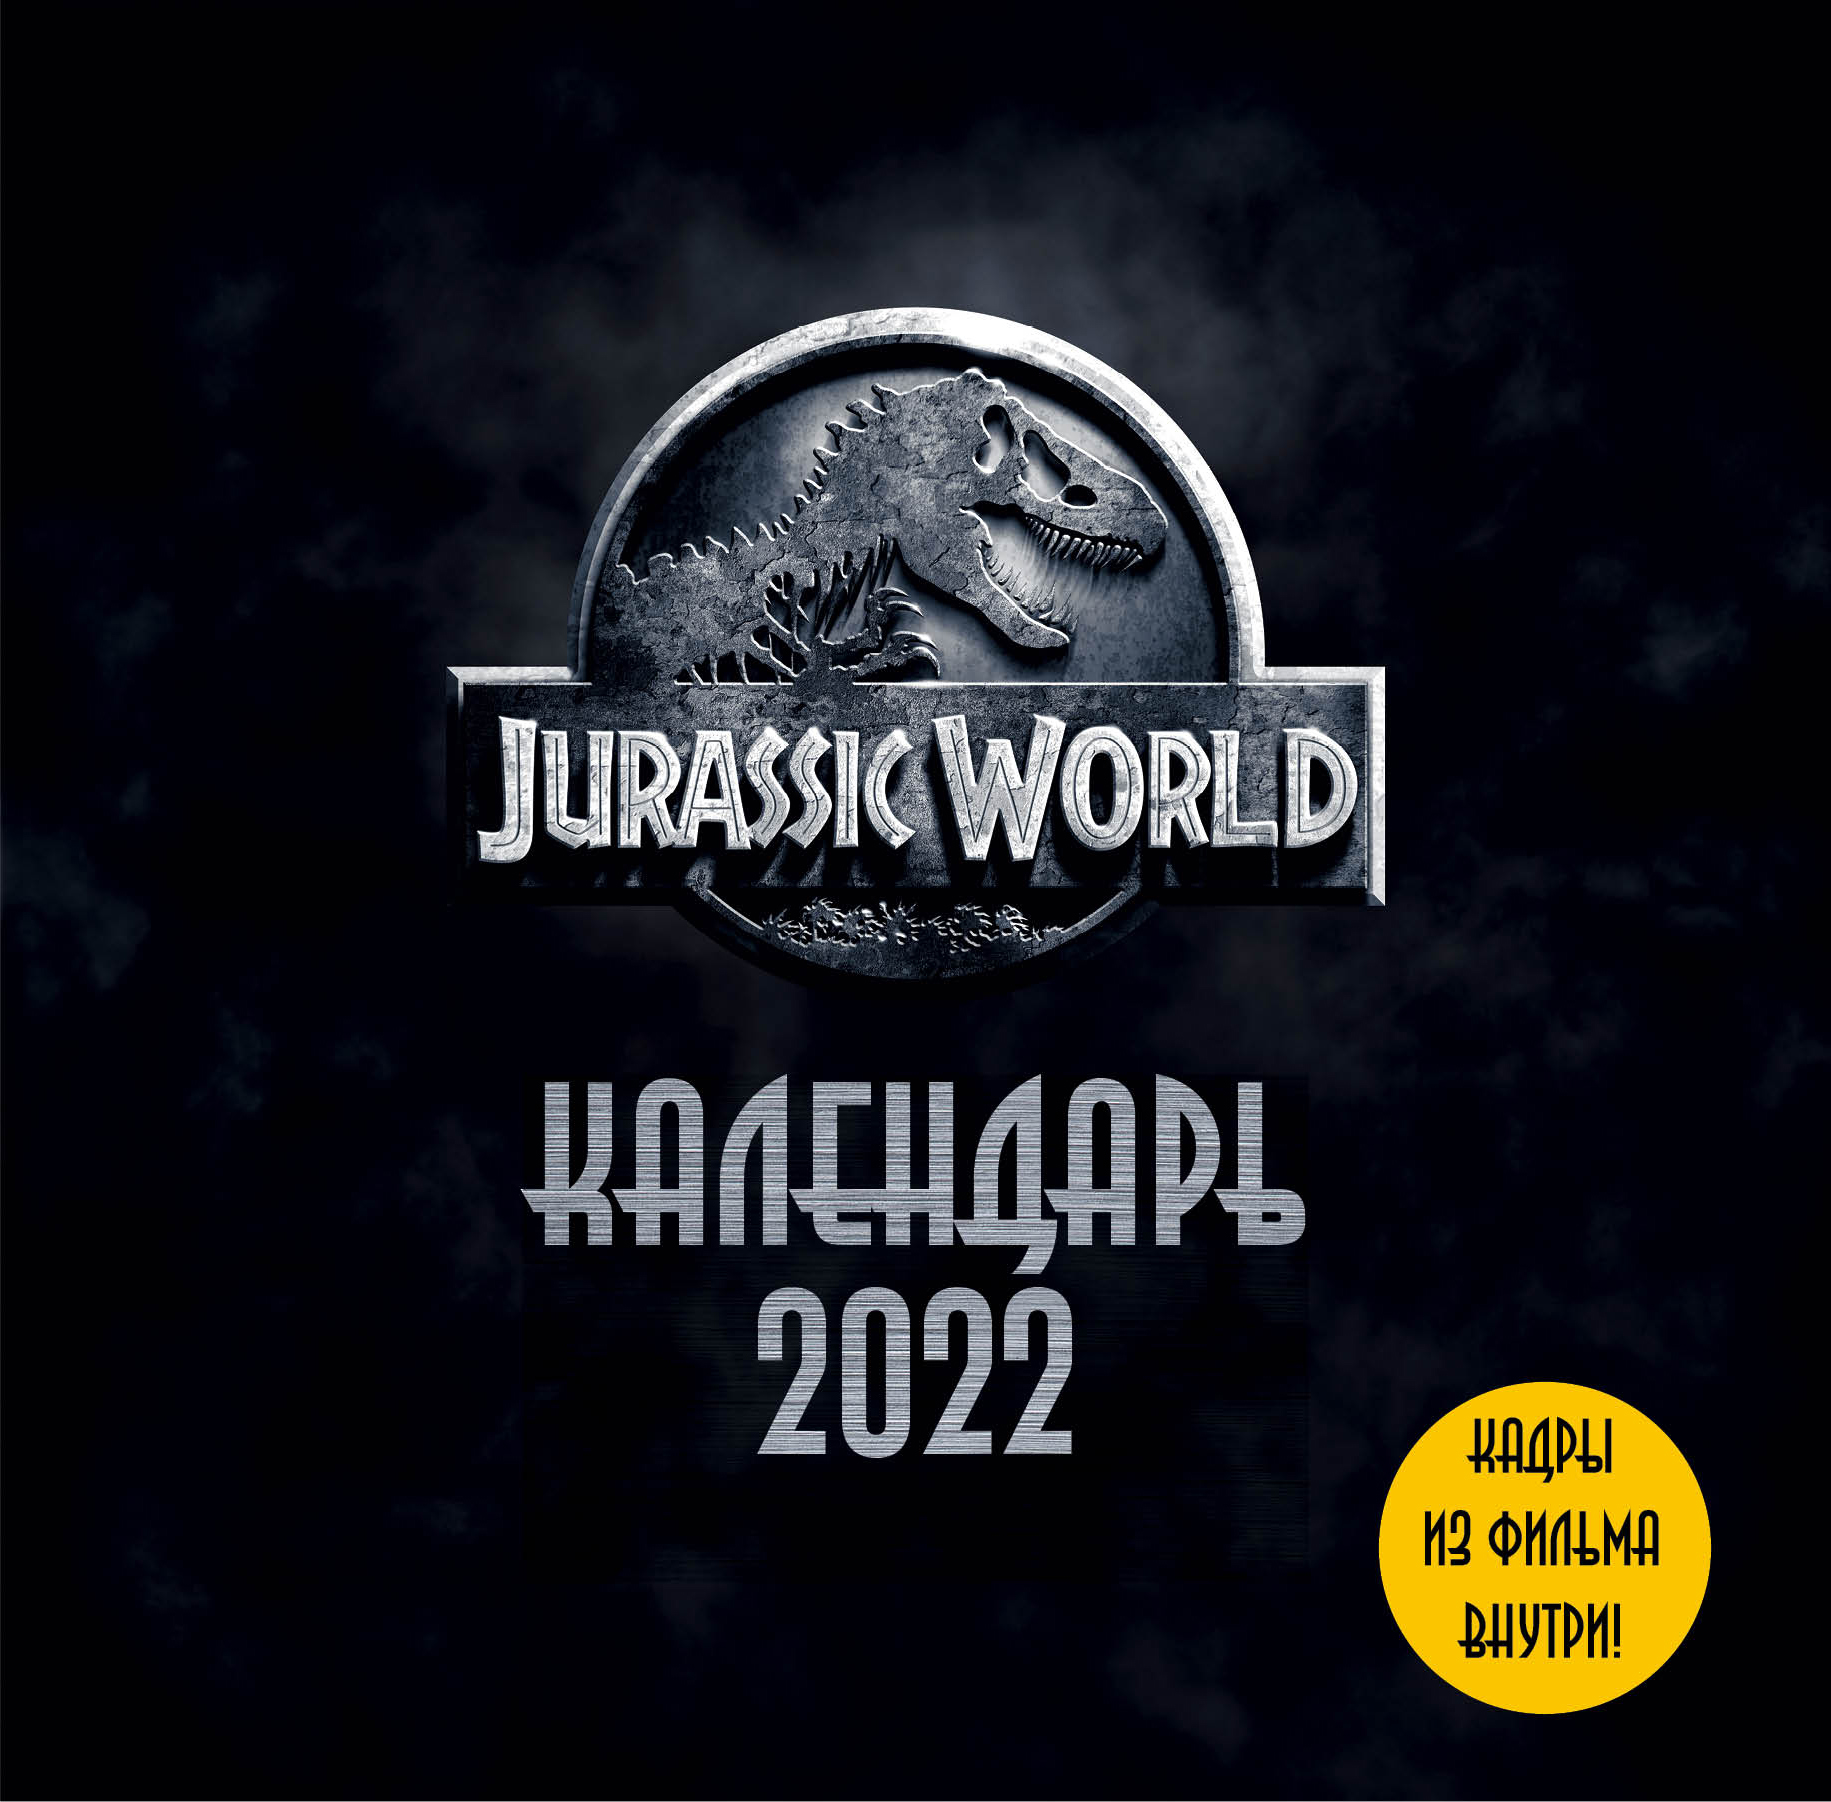    (Jurassic World).   .    2022  